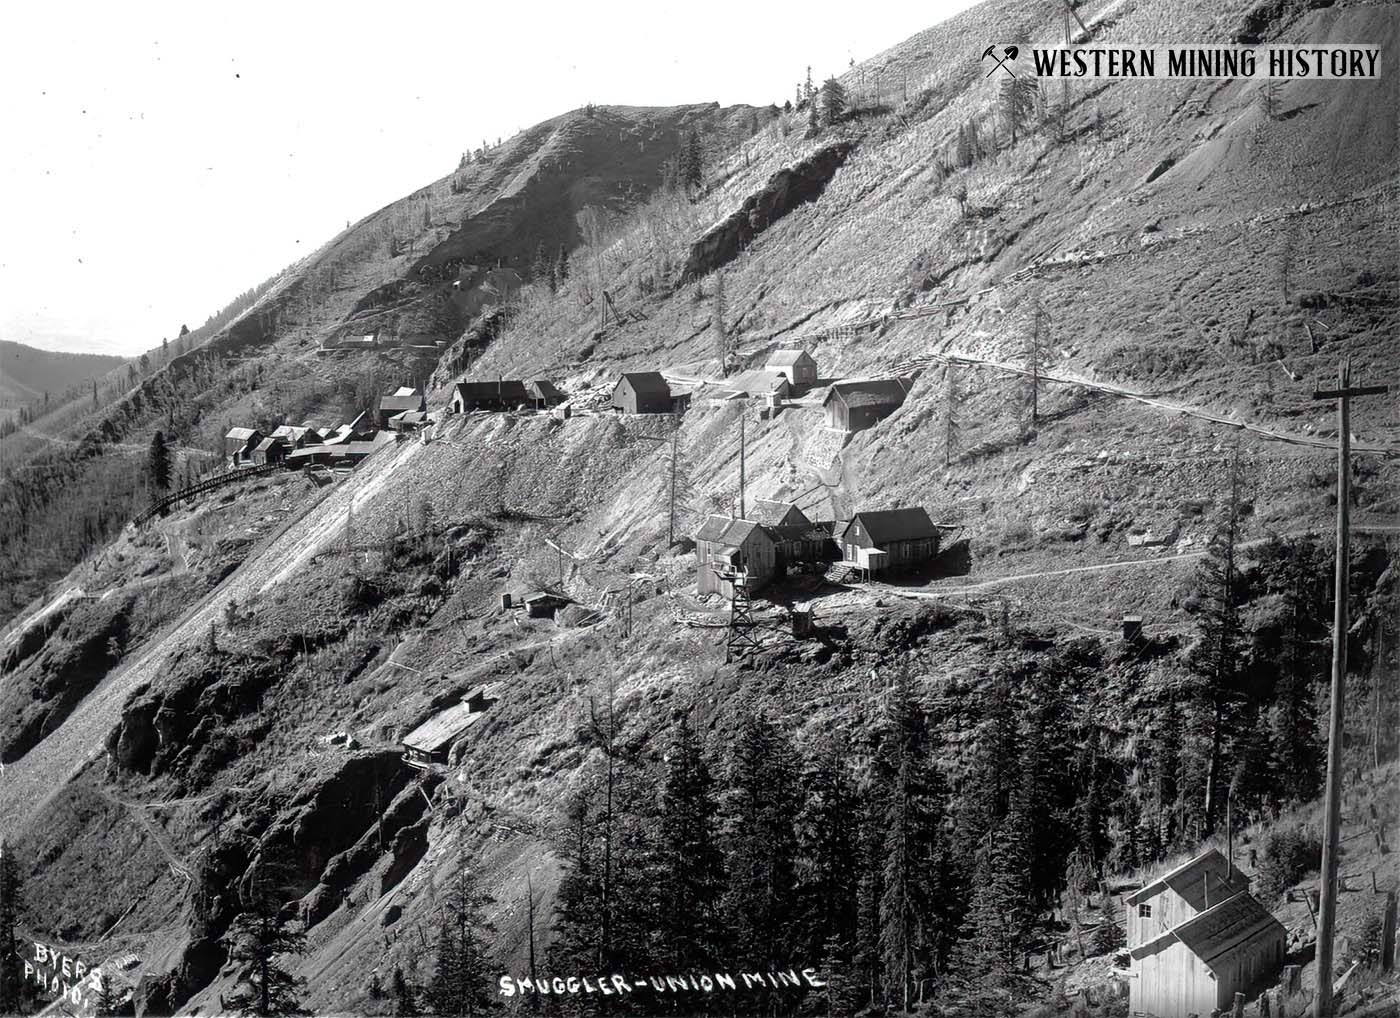 Smuggler-Union mine ca. 1910